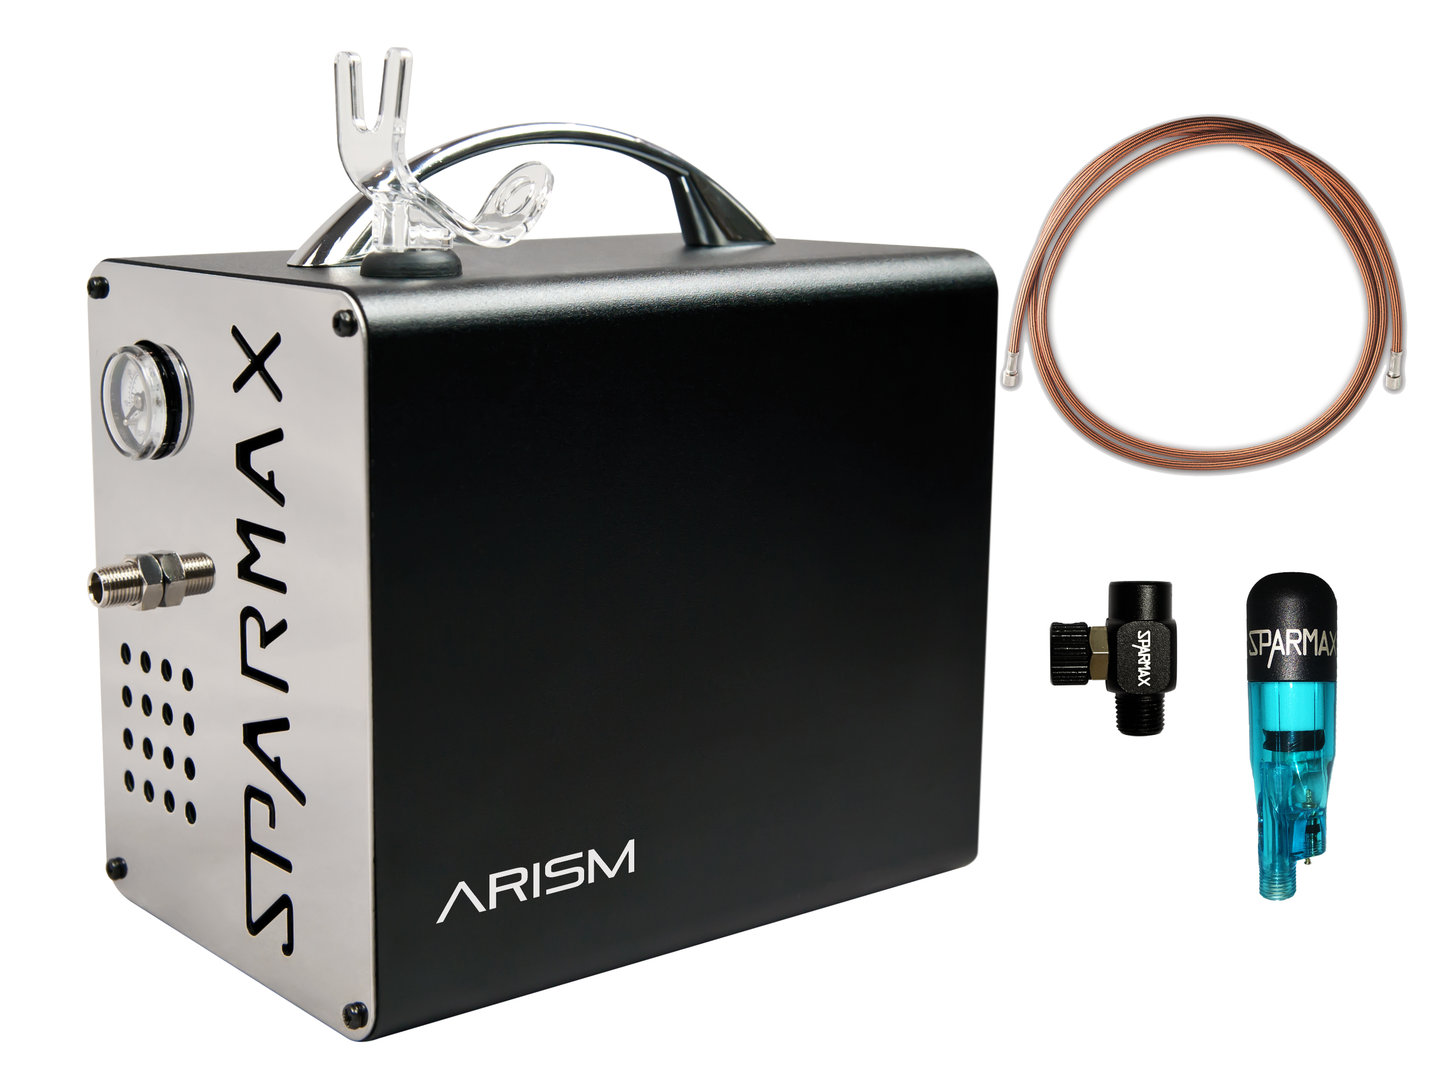 Airbrush Kompressor Anest Iwata Sparmax ARISM